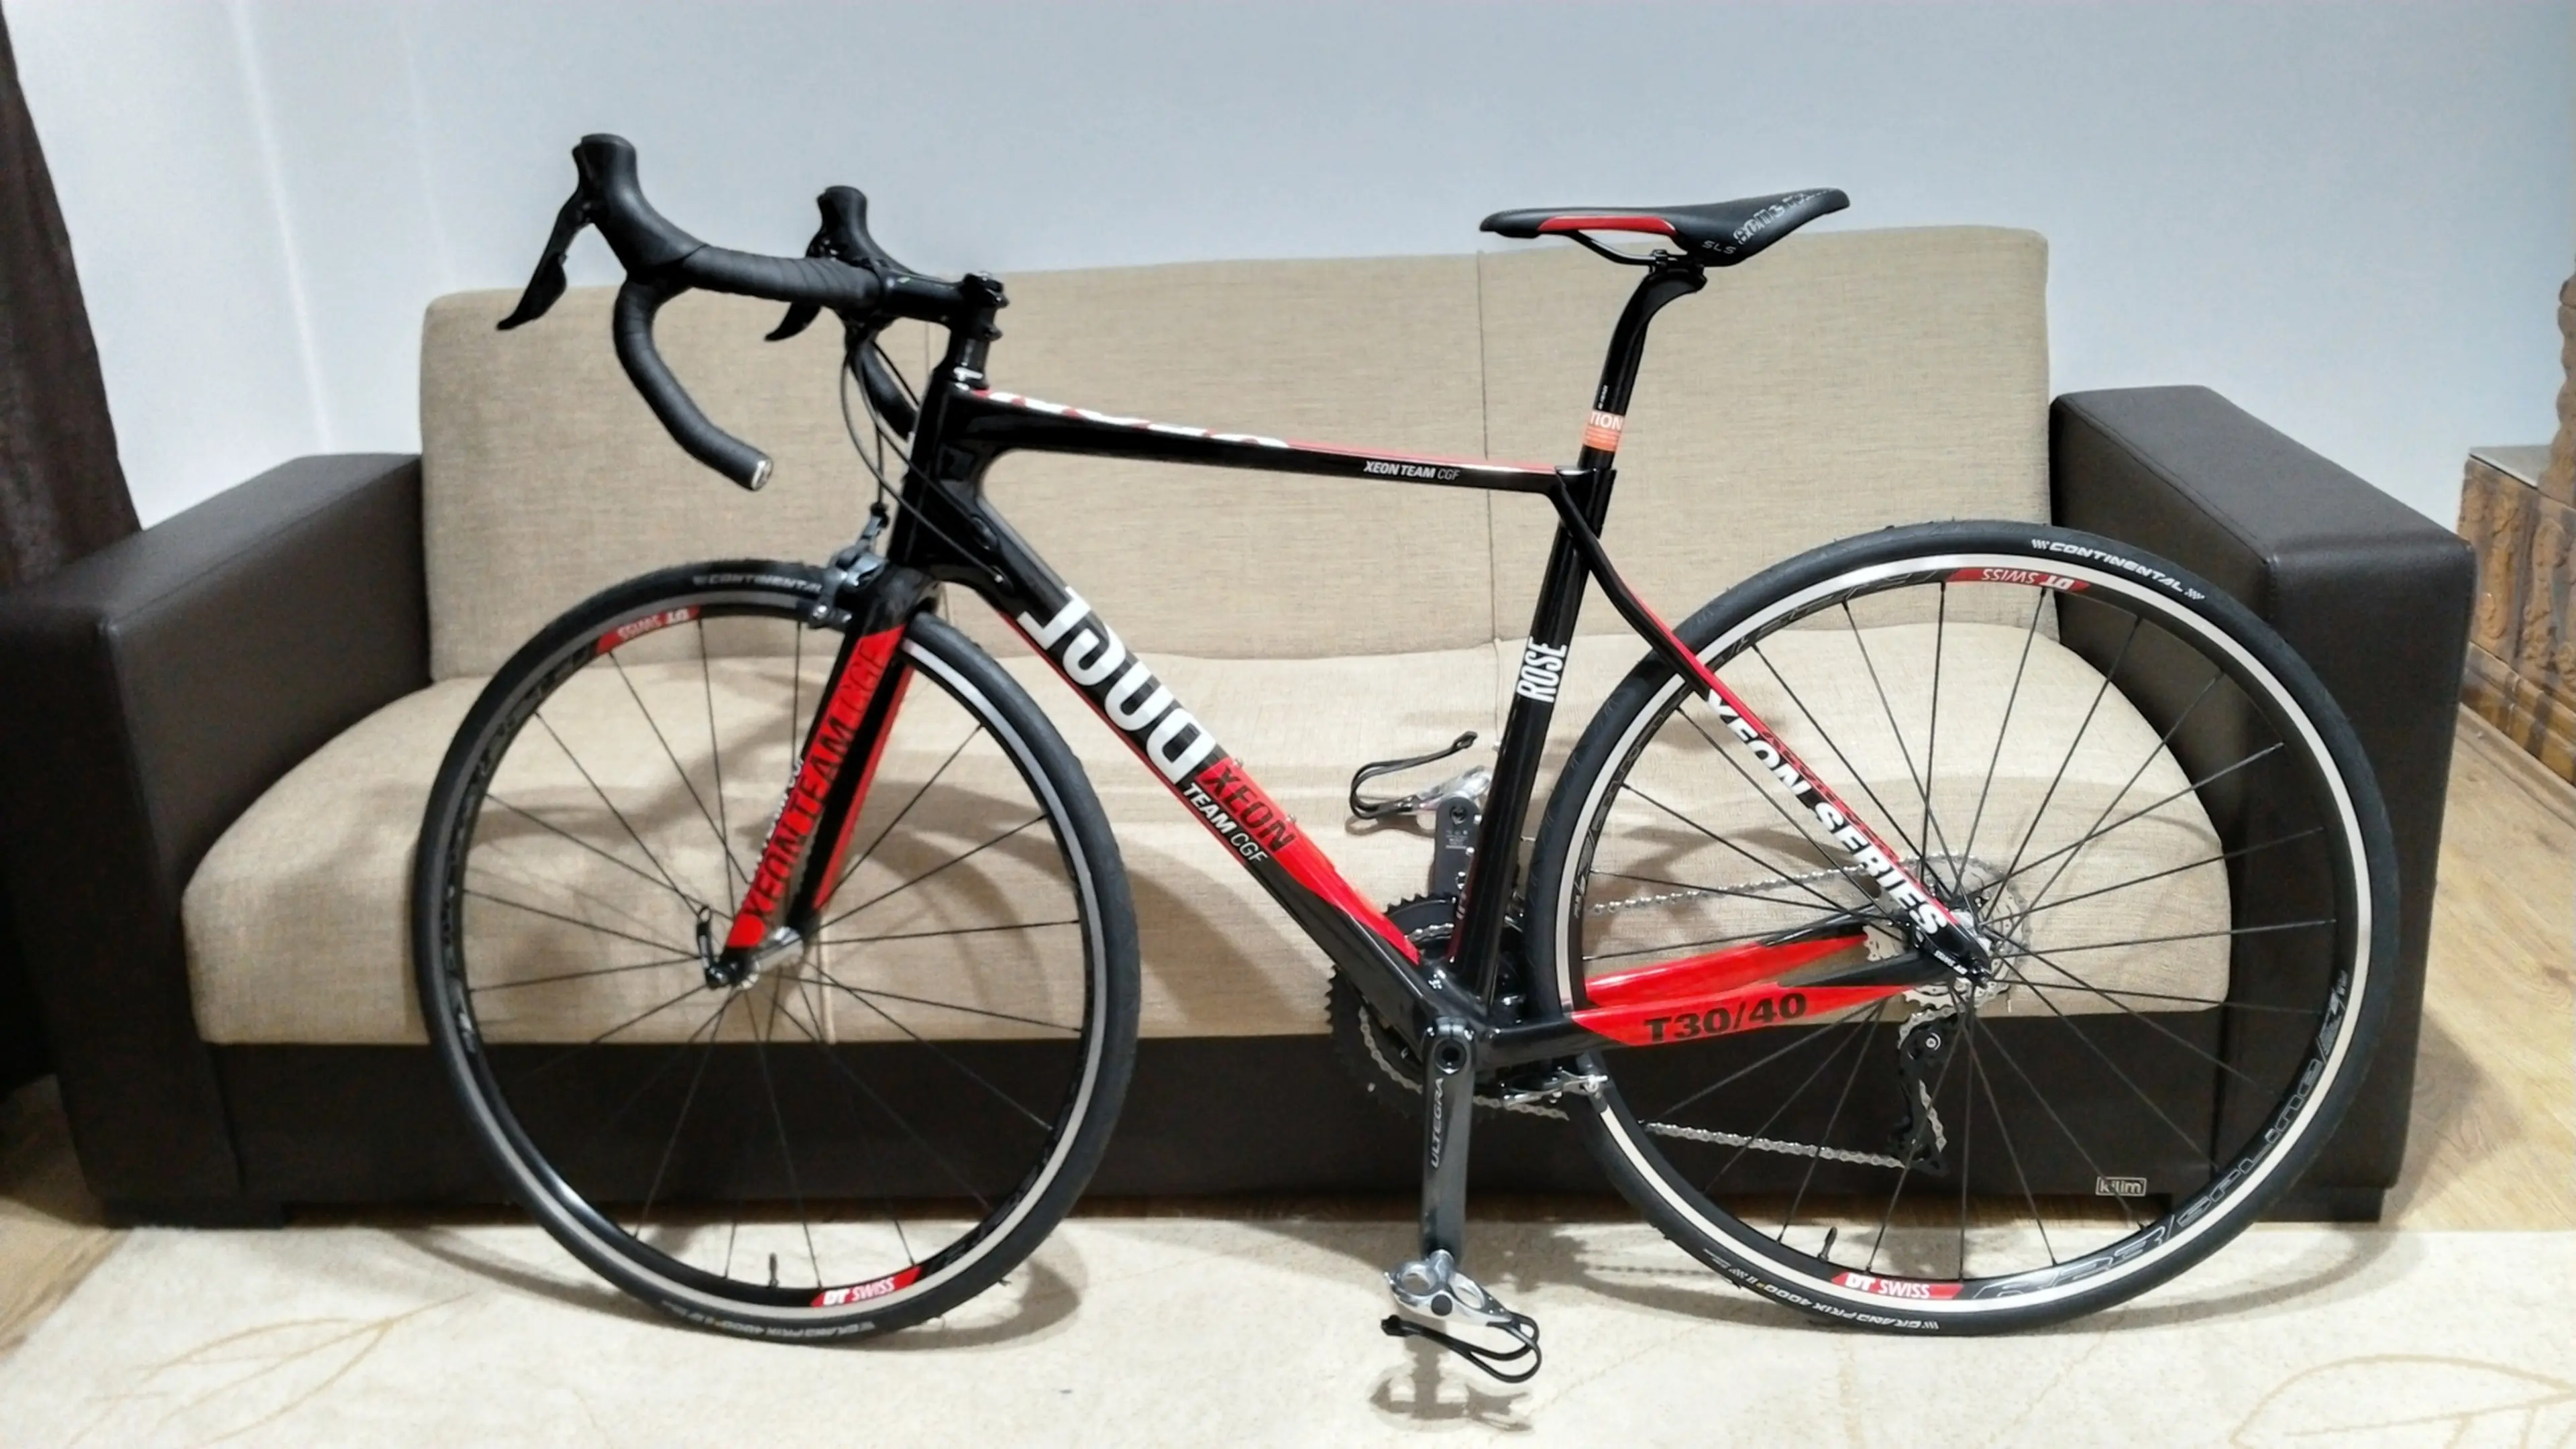 2. Bicicleta - cursiera rose bikes - xeon team cgf-3000 shiny-ud-carbon/red 53+